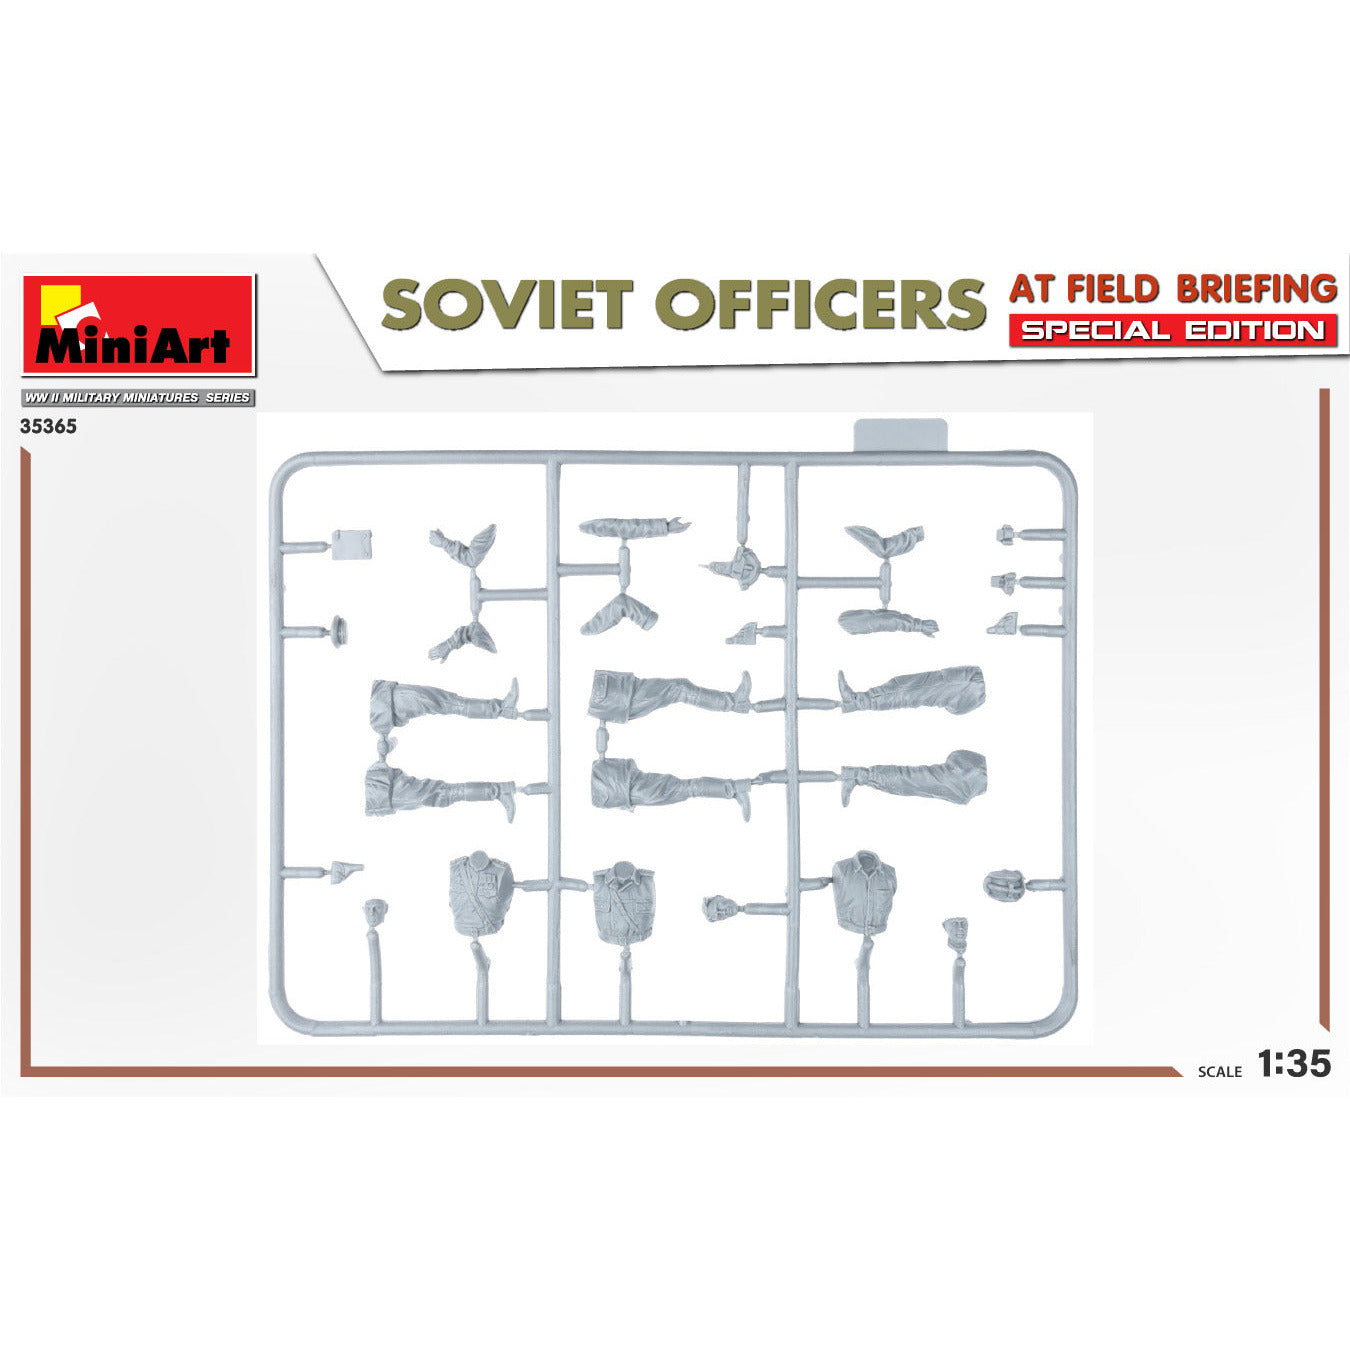 MINIART 1/35 Soviet Officers at Firld Briefing Special Edition